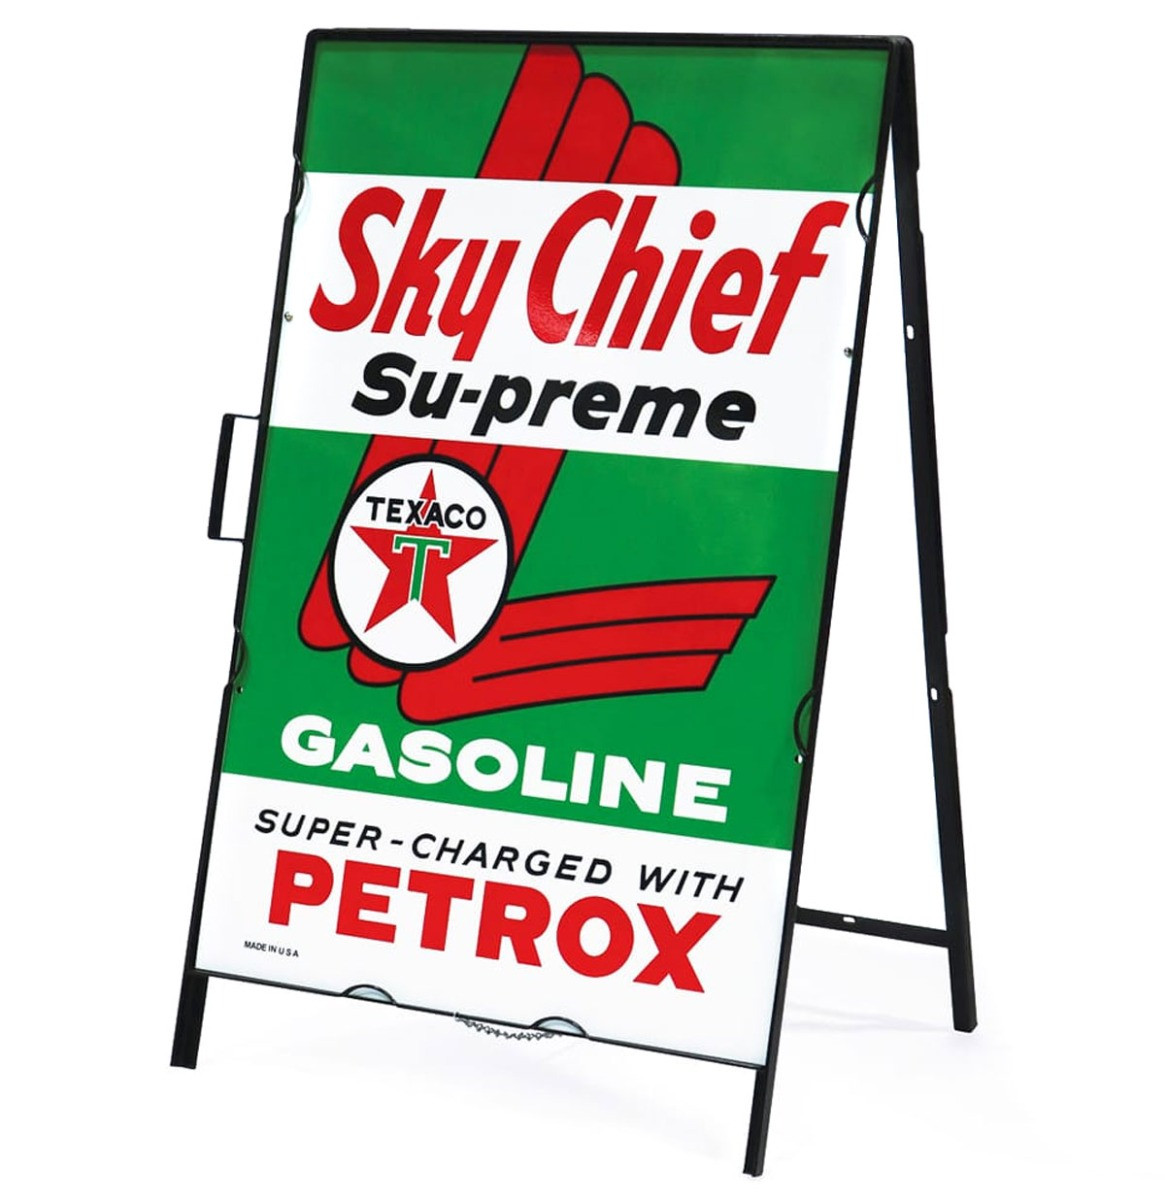 Texaco Skychief Supreme Gasoline Metalen Frame Met Bord